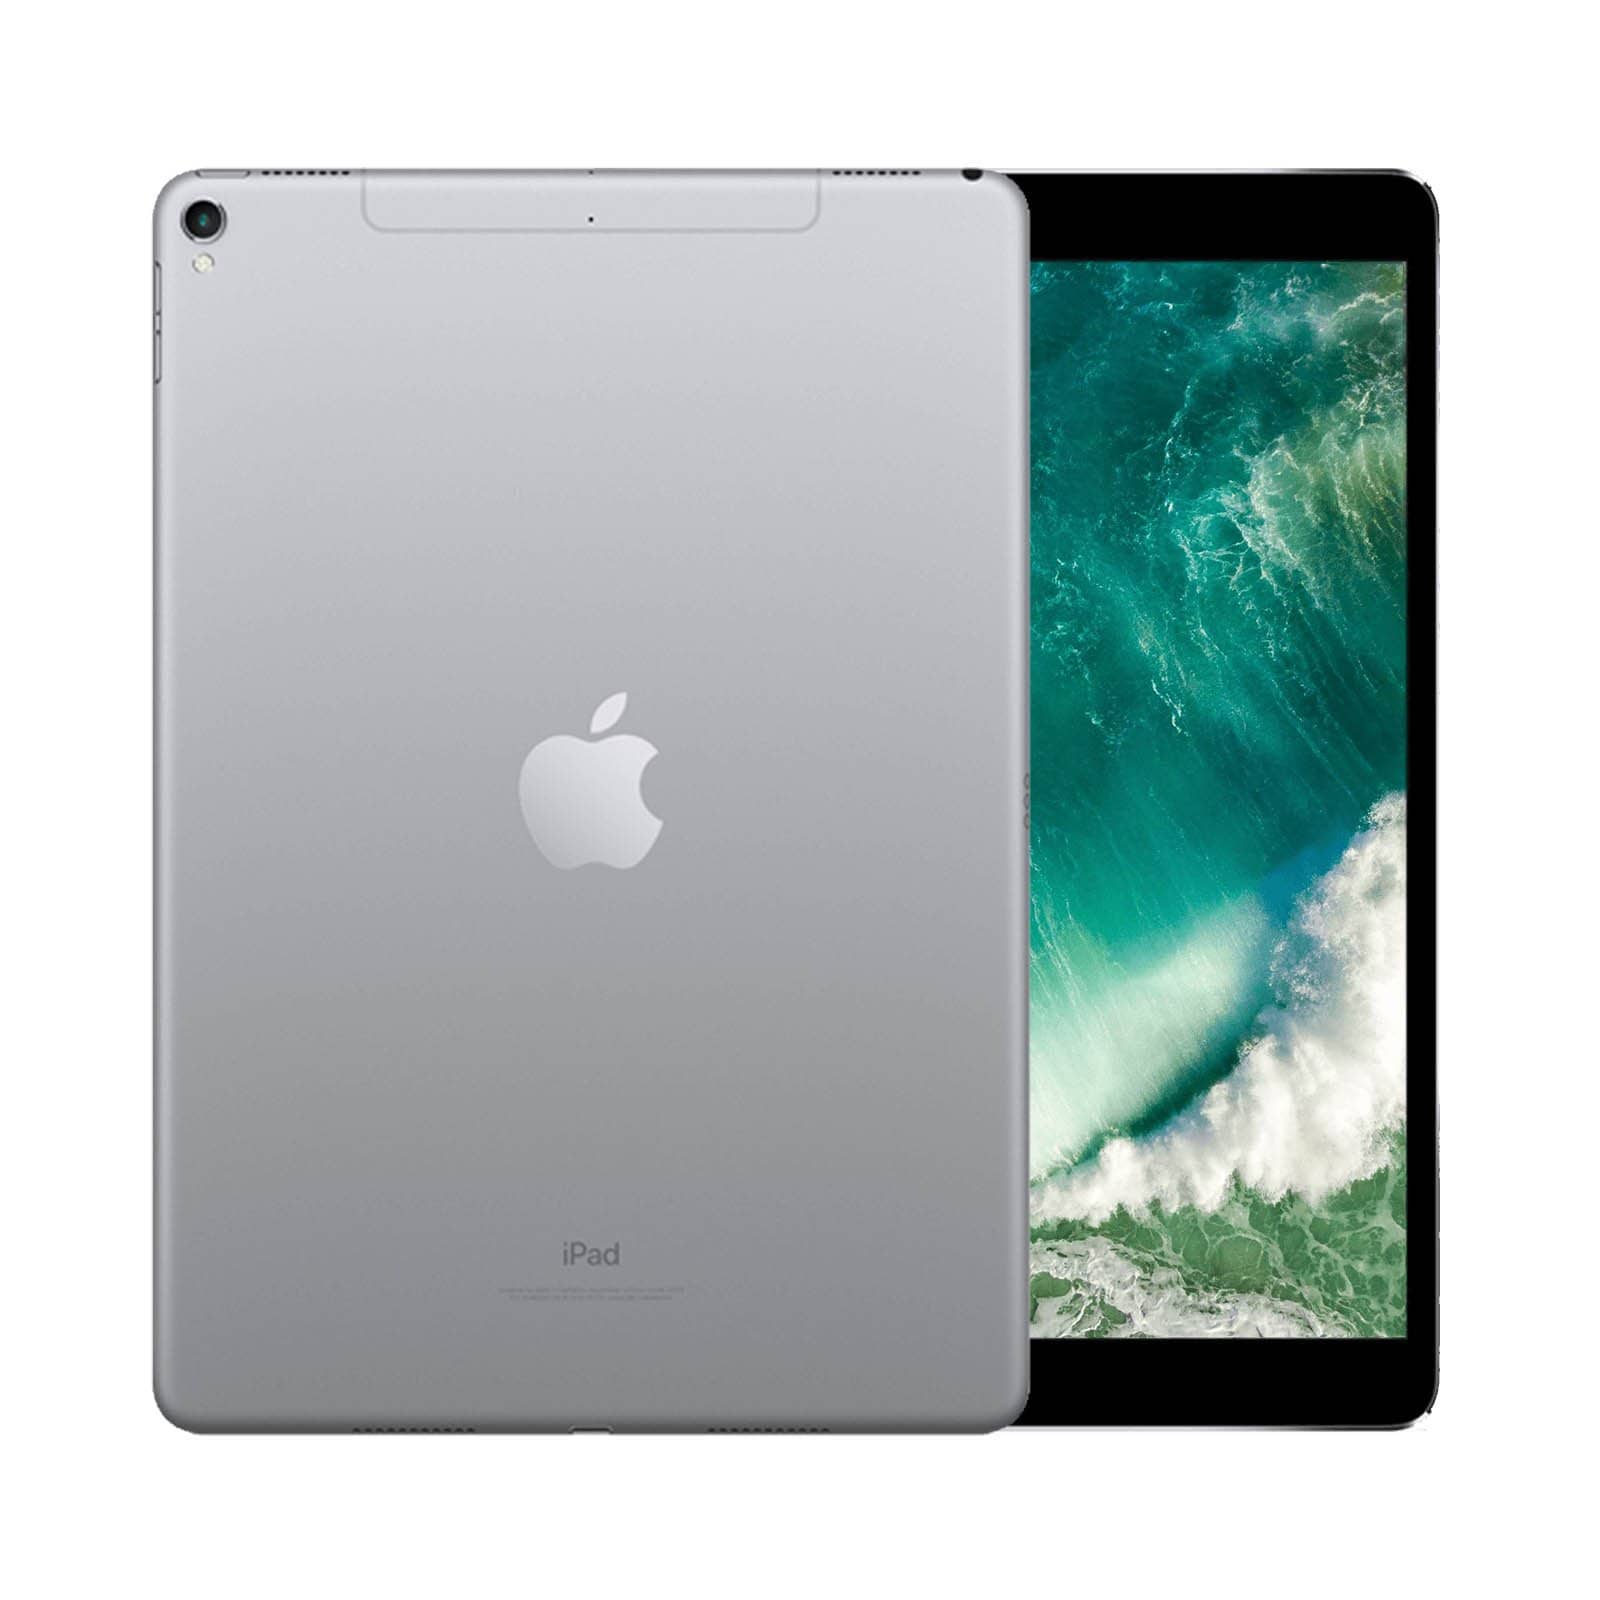 iPad Pro 10.5 Inch 64GB Space Grey Good - Unlocked 64GB Space Grey Good